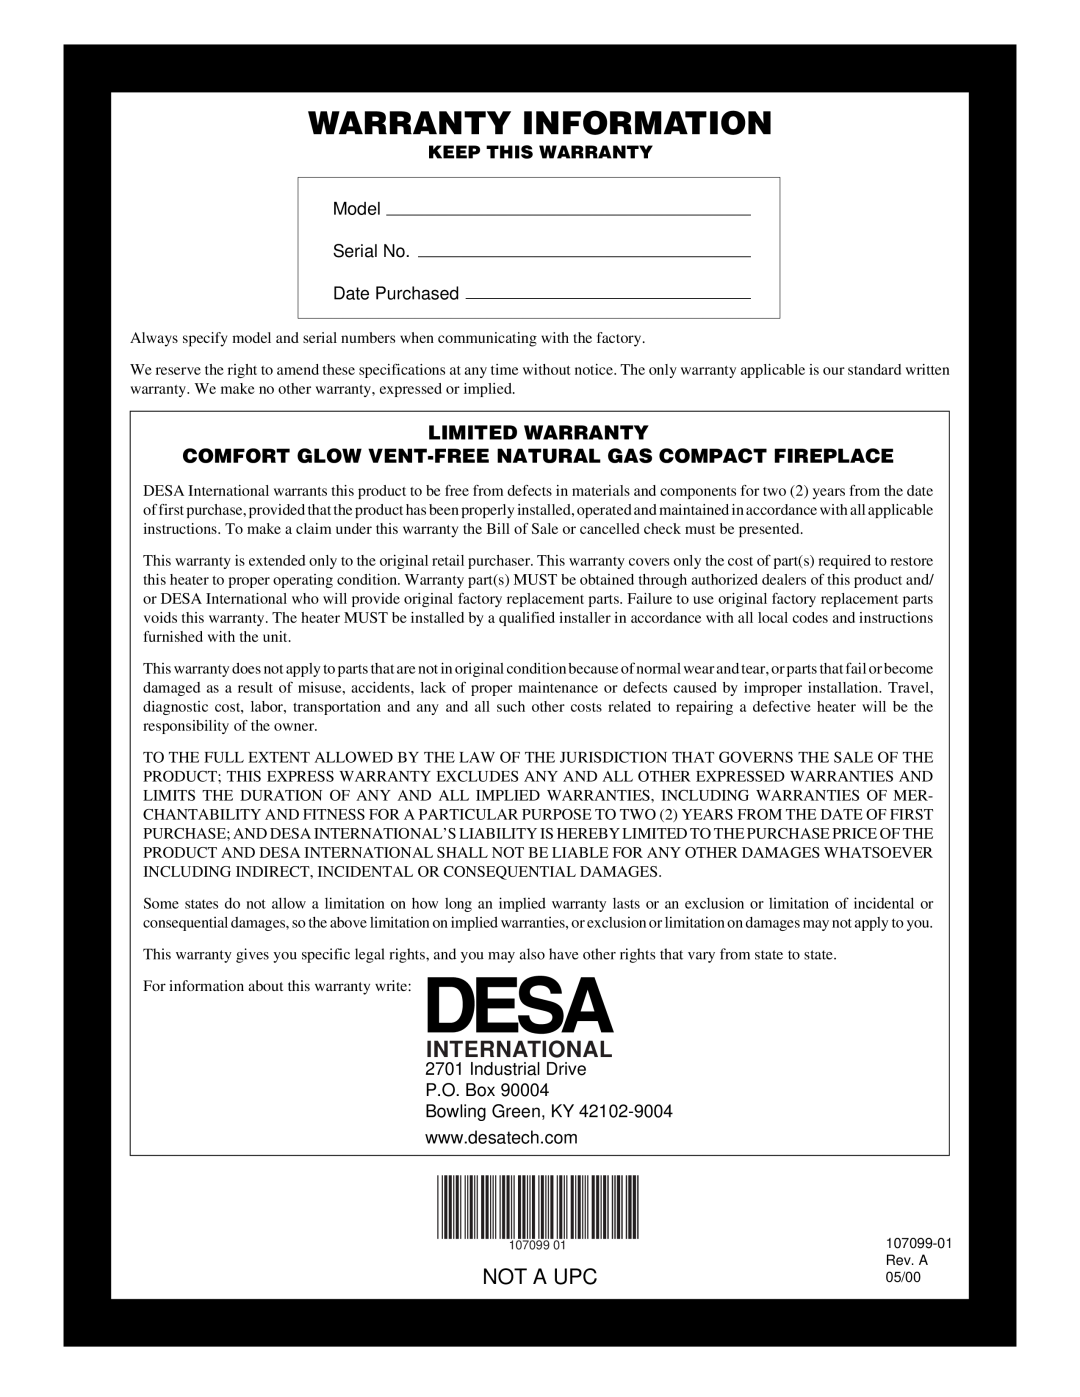 Desa RFN30TA Limited Warranty, Warranty Information, International, Not A Upc, Model Serial No Date Purchased 